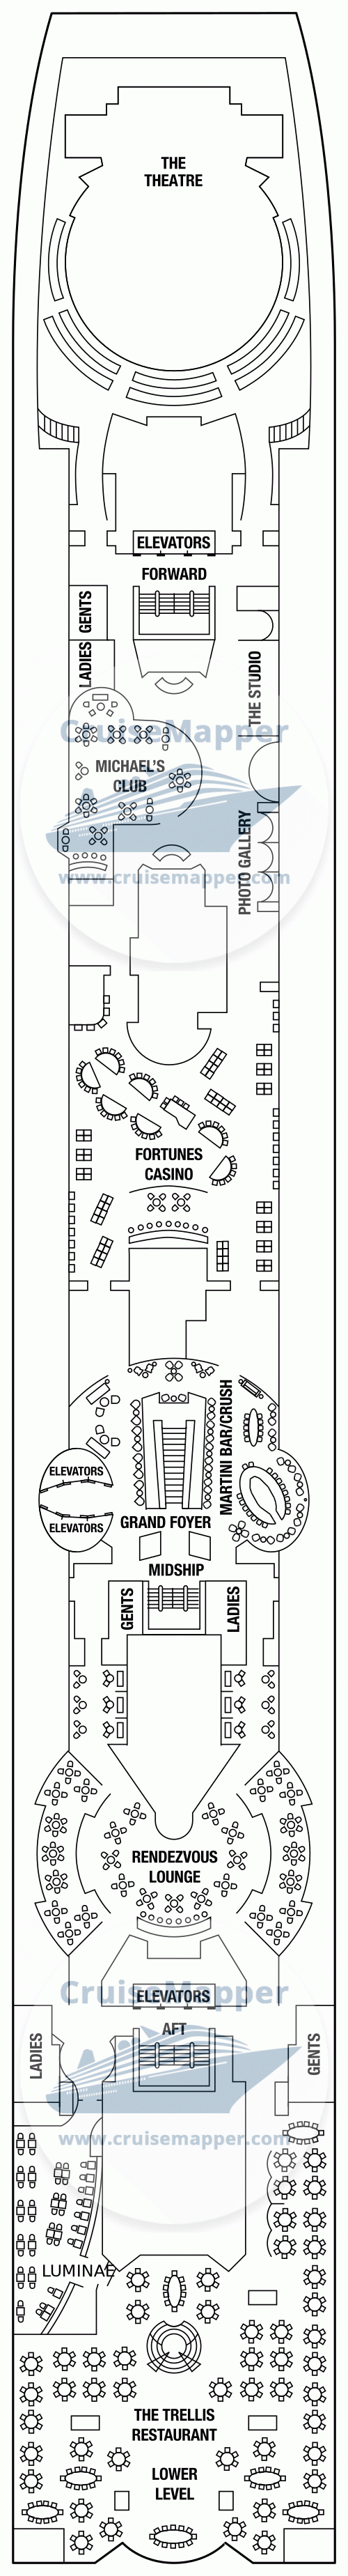 Celebrity Infinity Deck 04 - Promenade-Casino